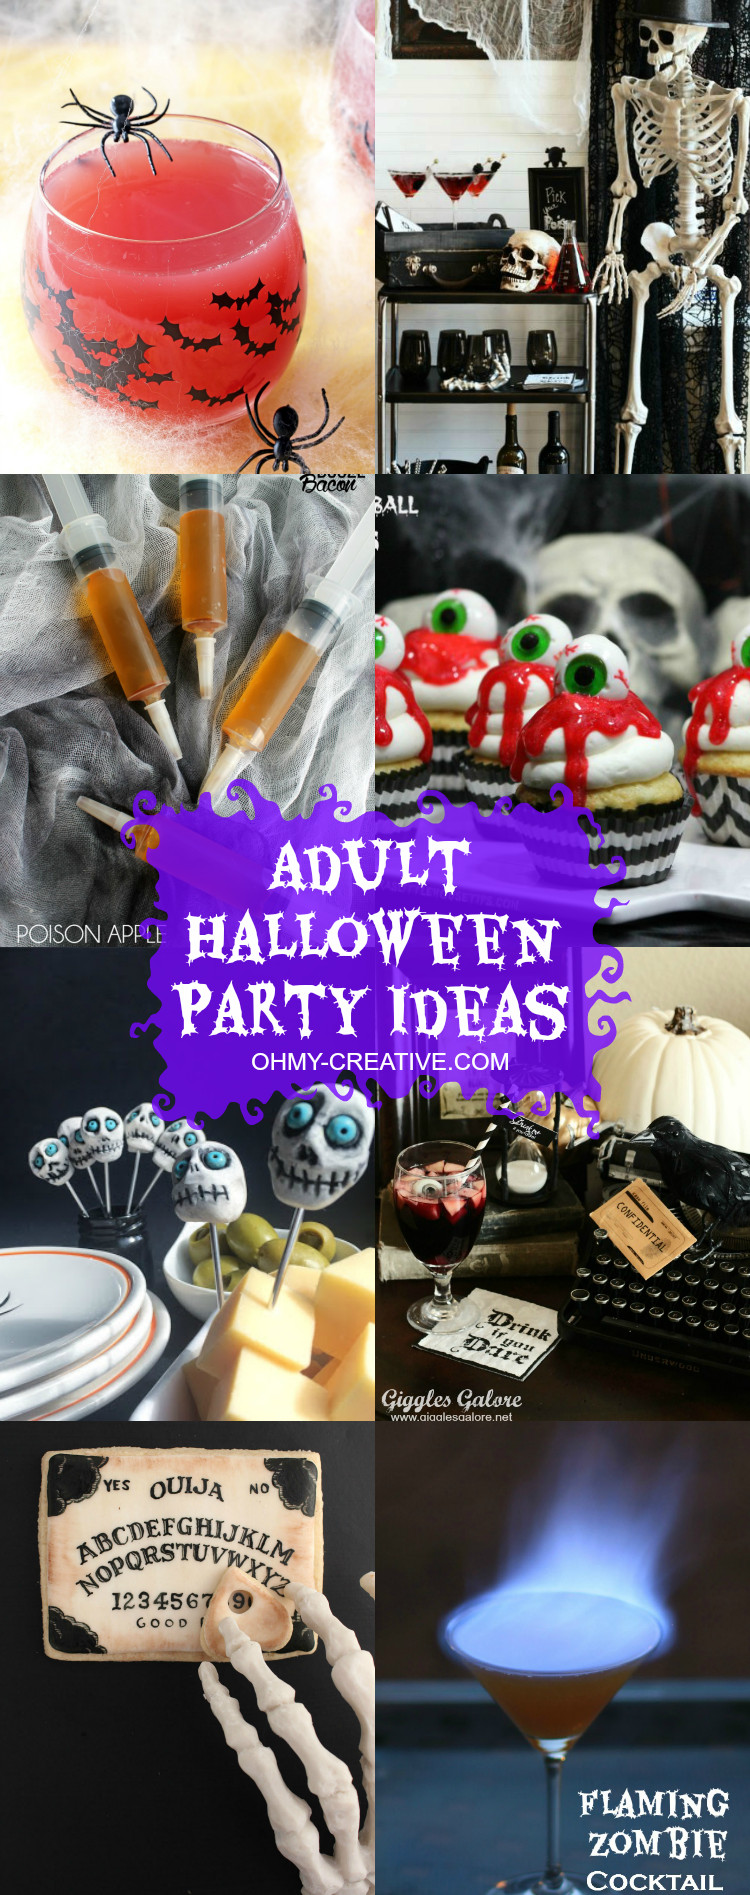 Halloween Party Ideas Adult
 Adult Halloween Party Ideas Oh My Creative